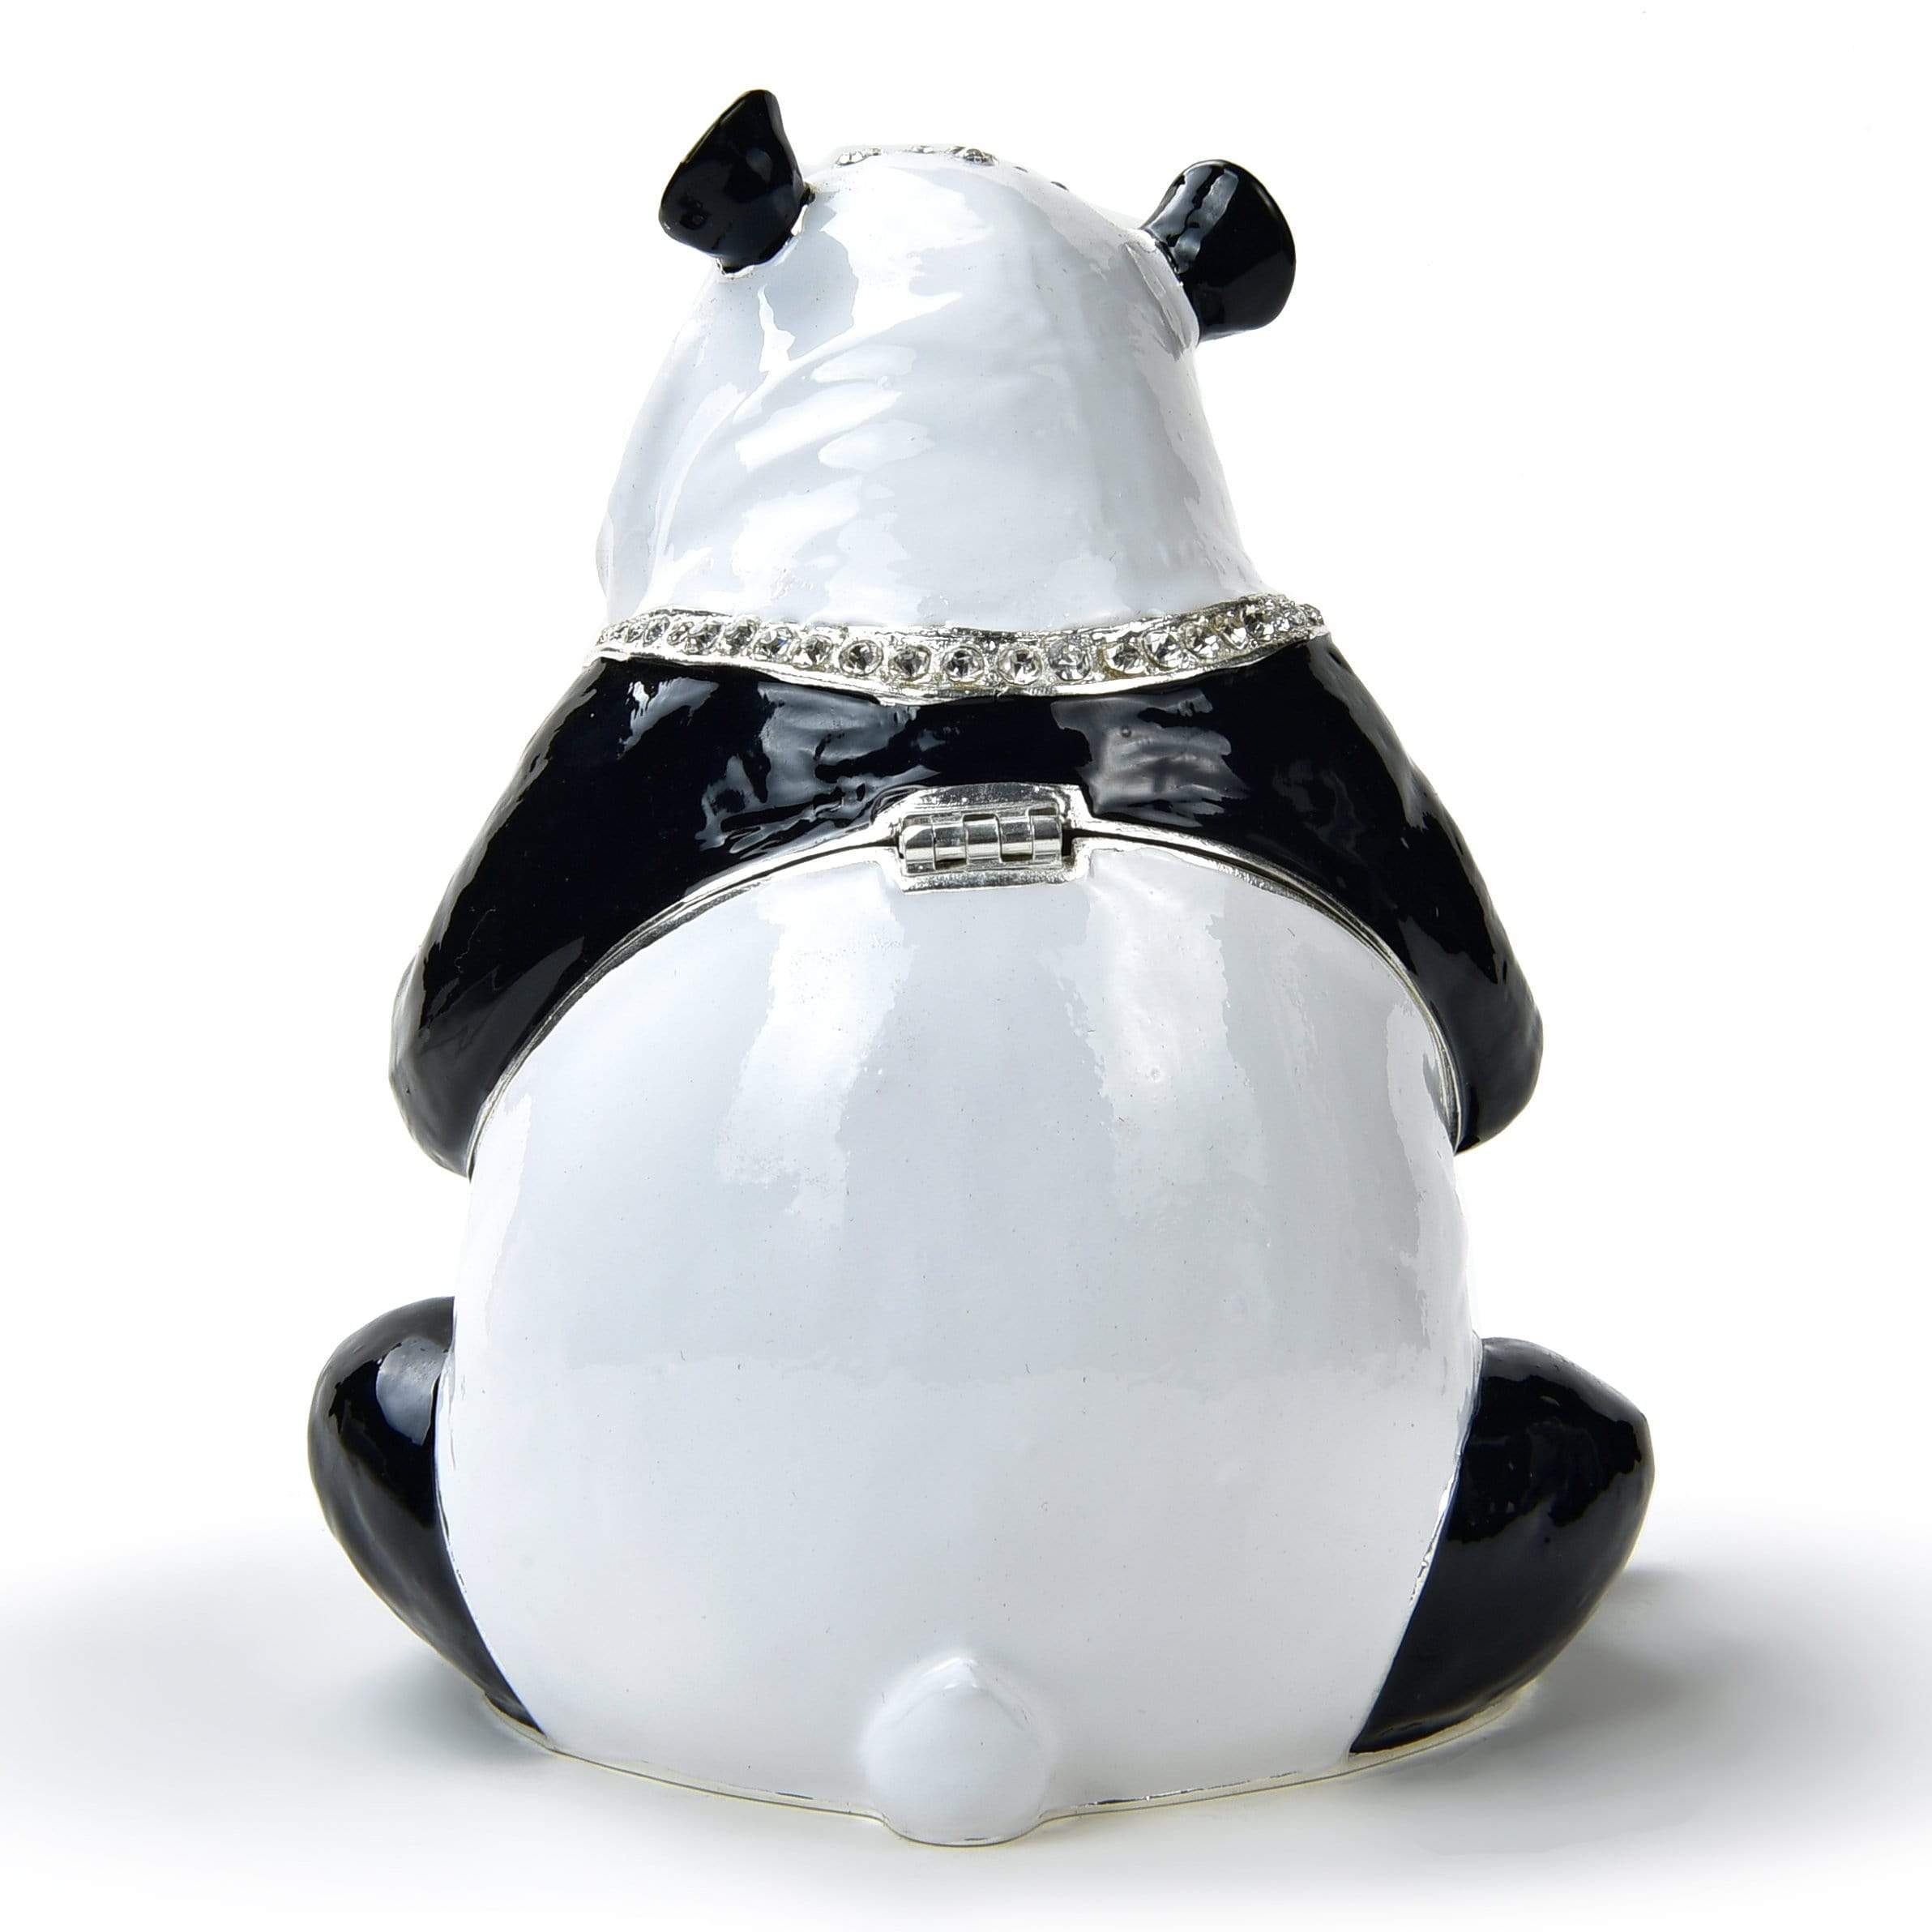 Kalifano Vanity Figurine Panda Figurine Keepsake Box made with Crystals SVA-097